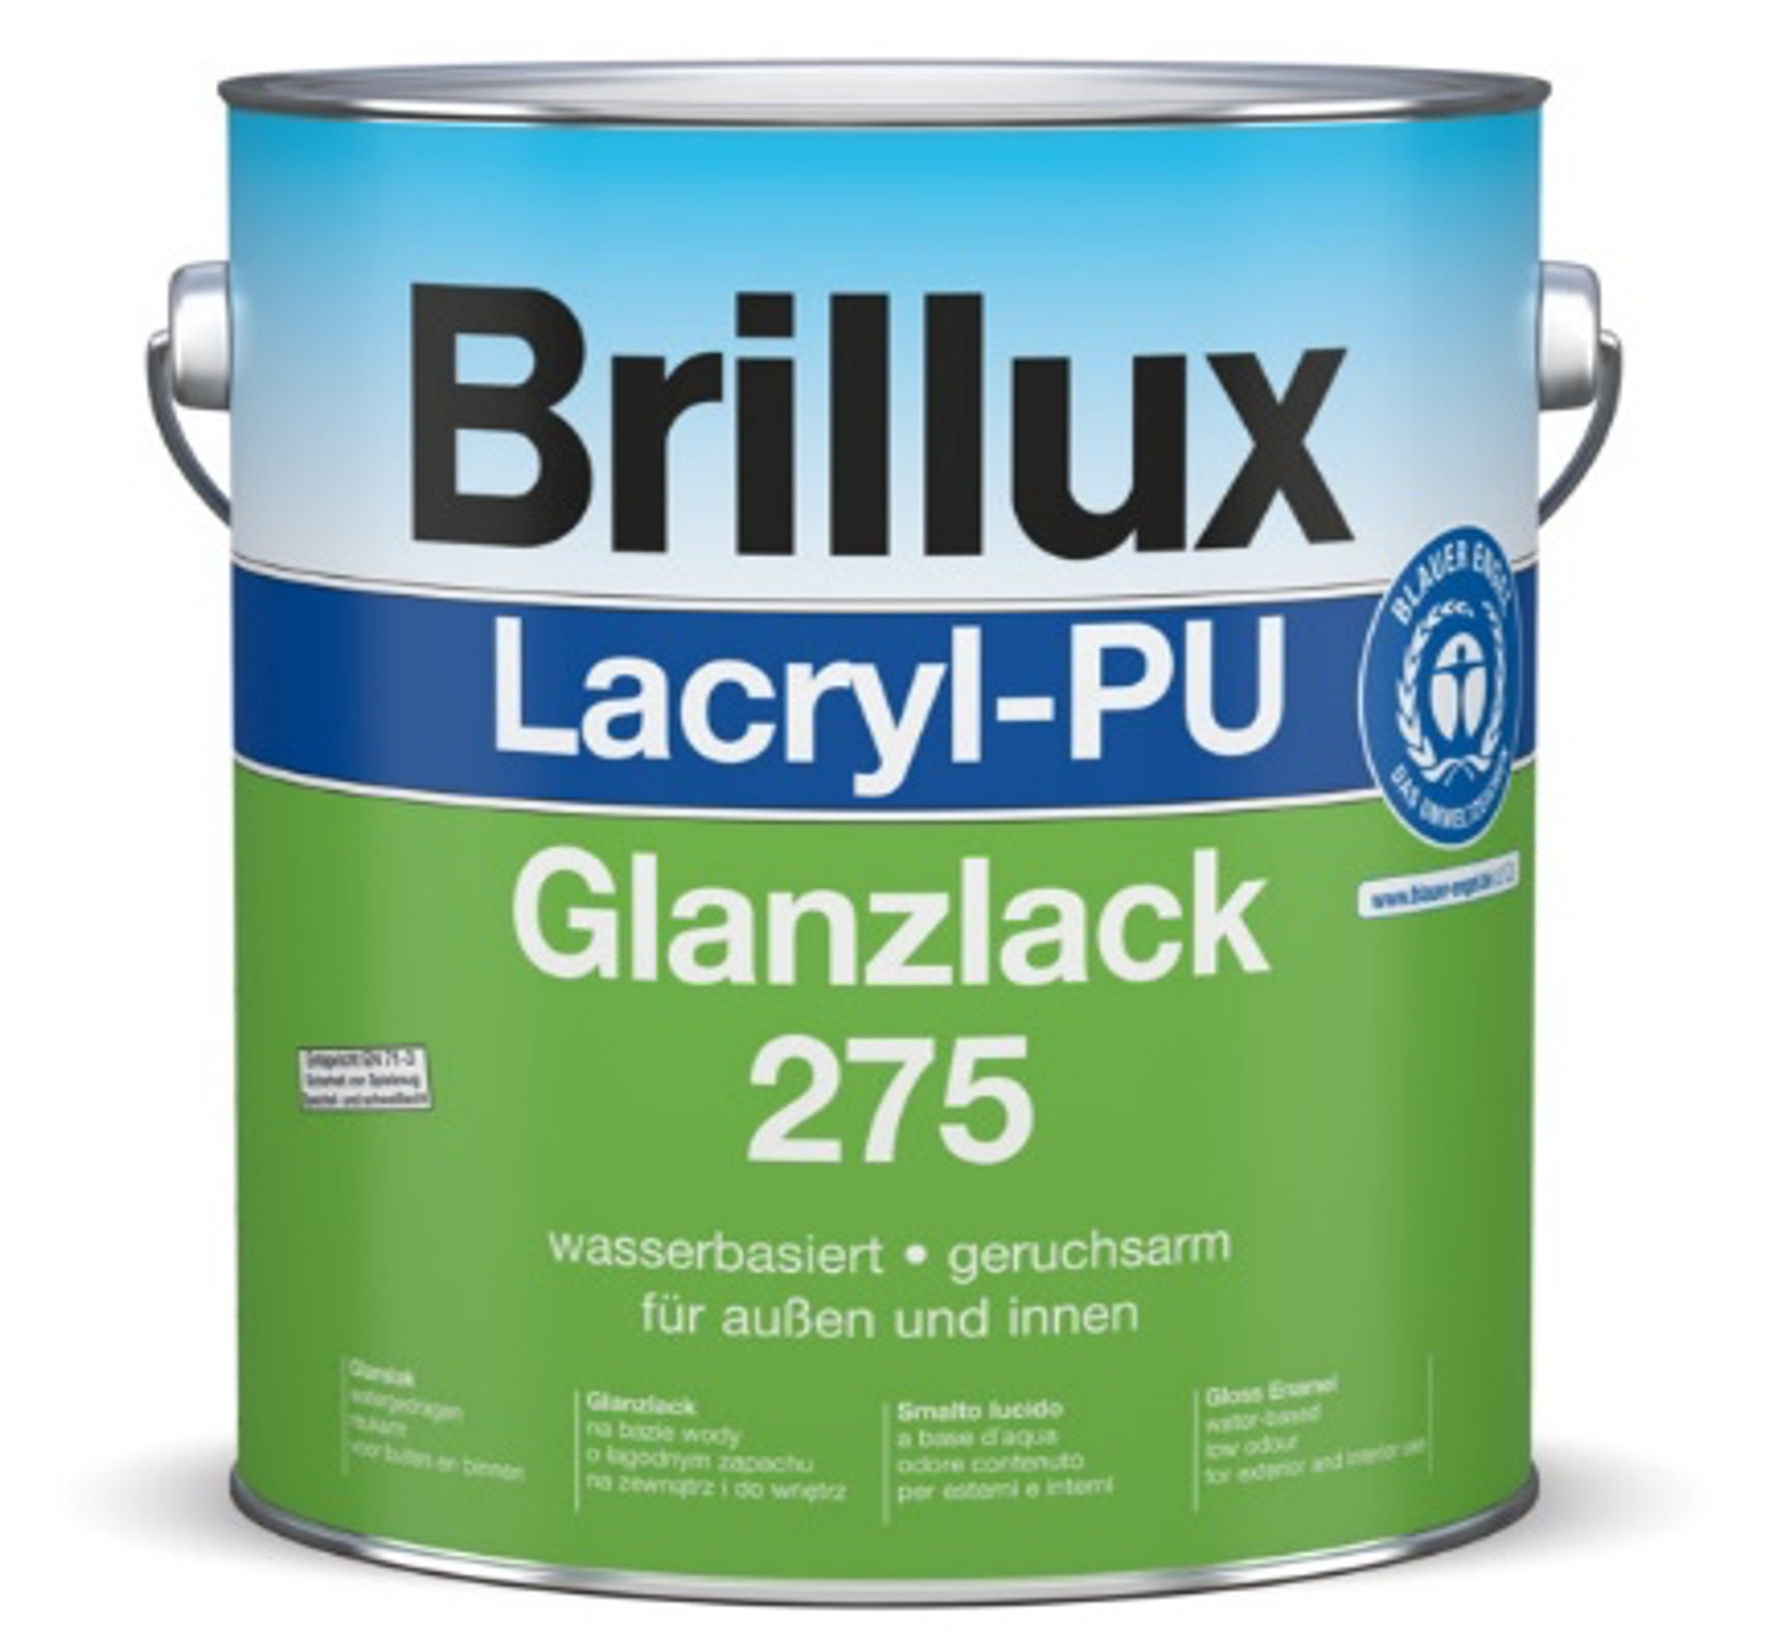 Brillux Lacryl PU Glanzlack 275 Wasserlack Image